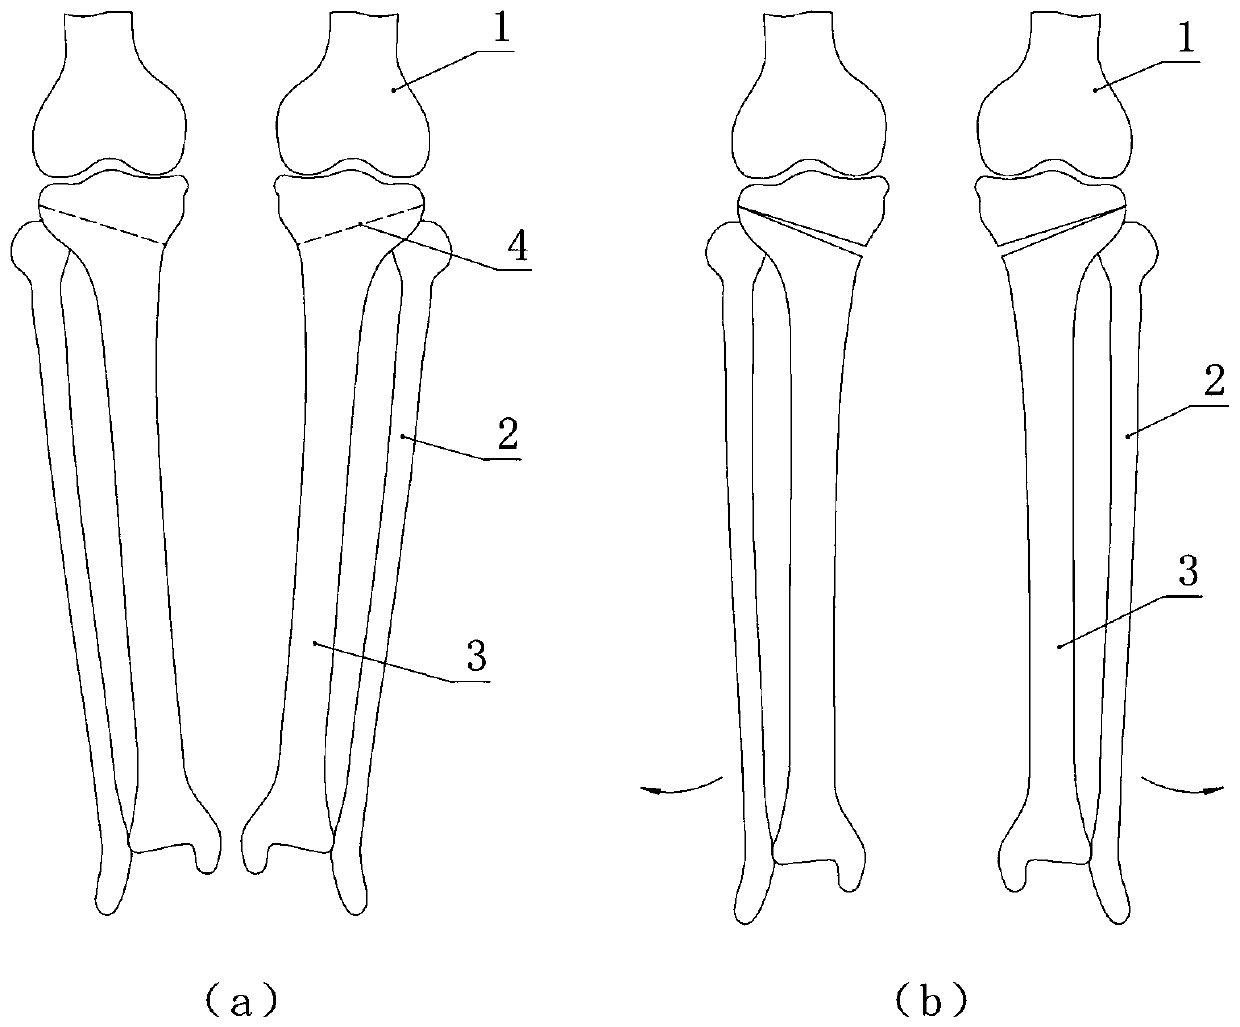 Tibia correcting device for treating knee-osteoarthritis varus-valgus deformities